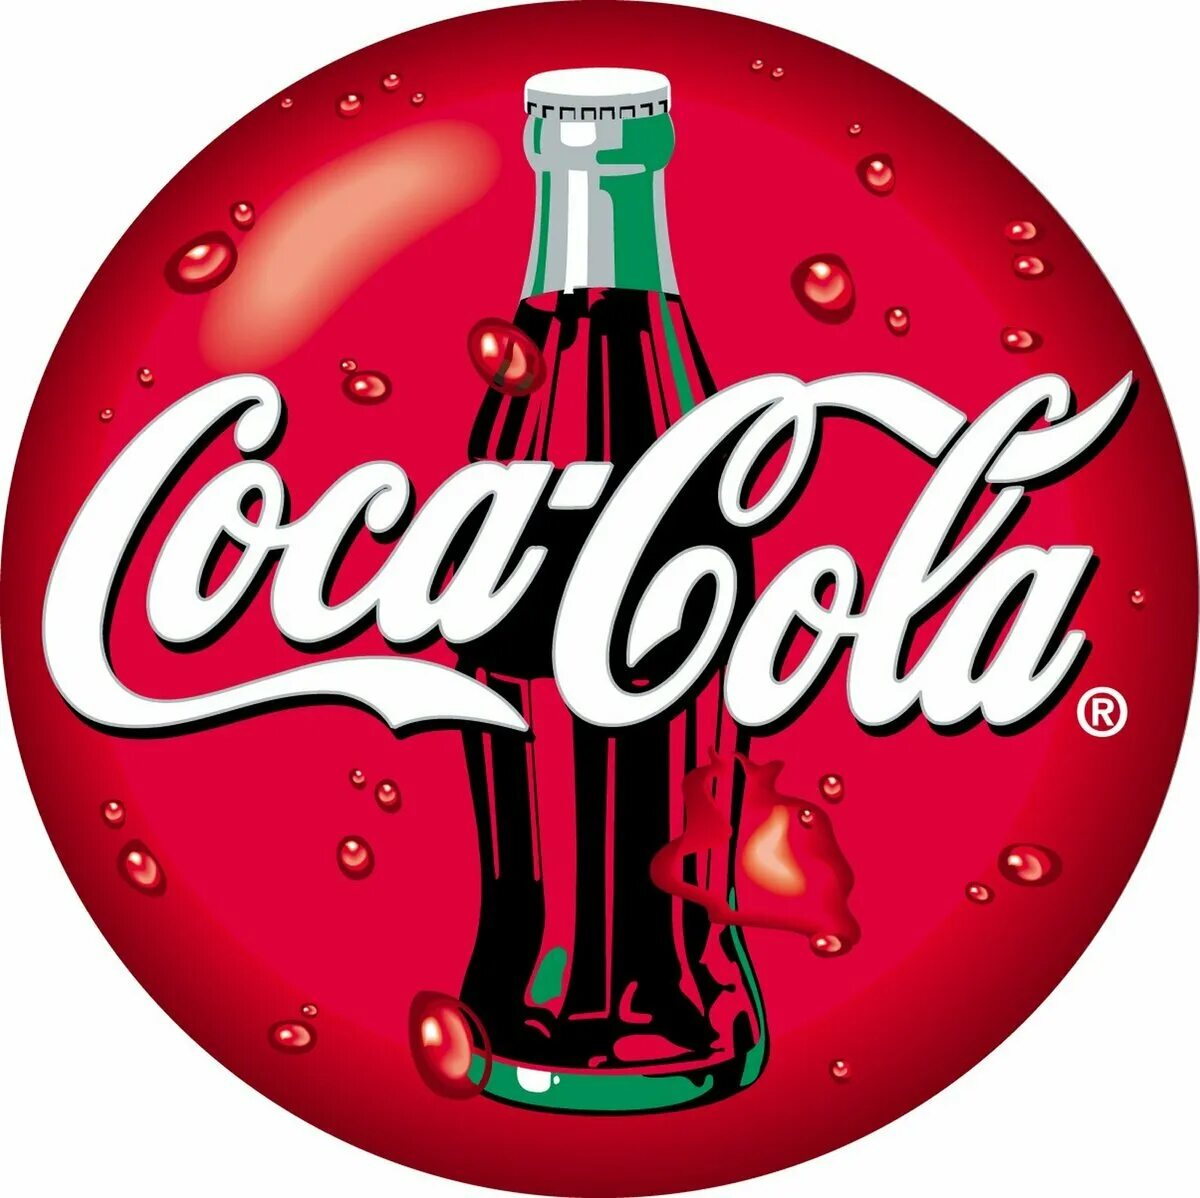 Герб колы. Кока кола. Логотип Кока колы. Логотип компании Кока кола. Товарный знак Кока кола.